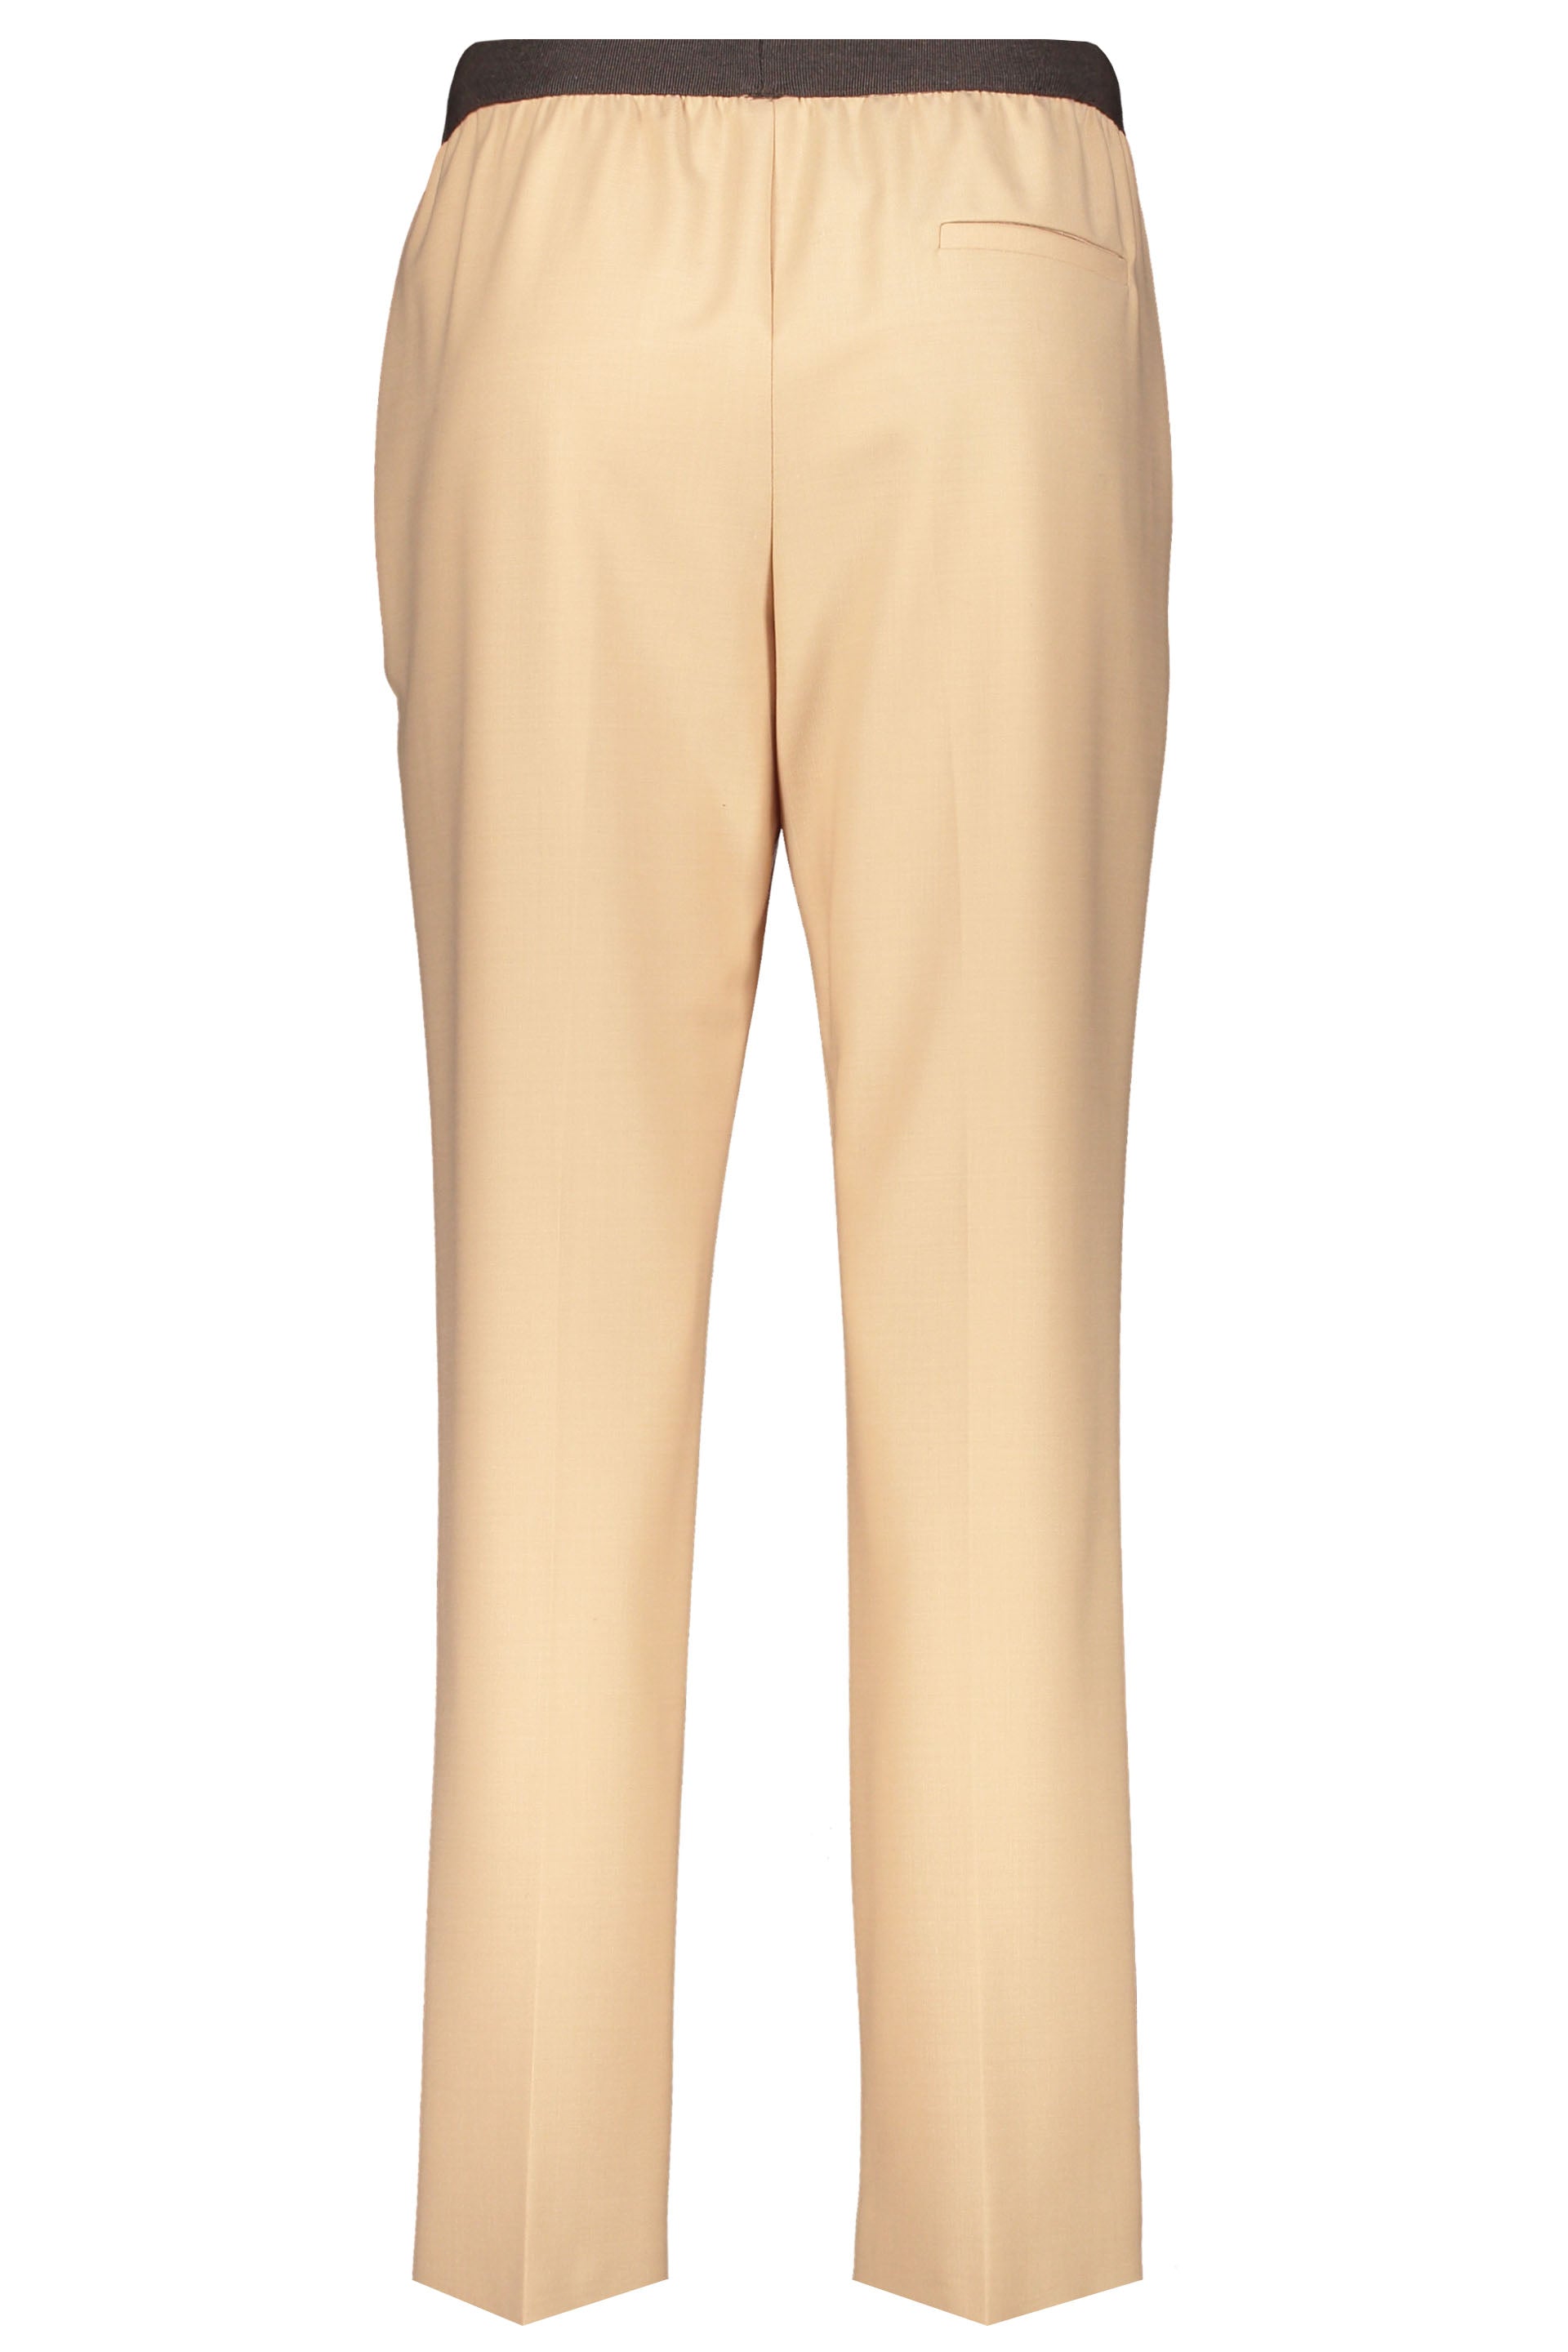 Agnona-OUTLET-SALE-Long-trousers-Hosen-ARCHIVE-COLLECTION-2_f0773c66-91f8-45cd-8db3-081a7d14038f.jpg